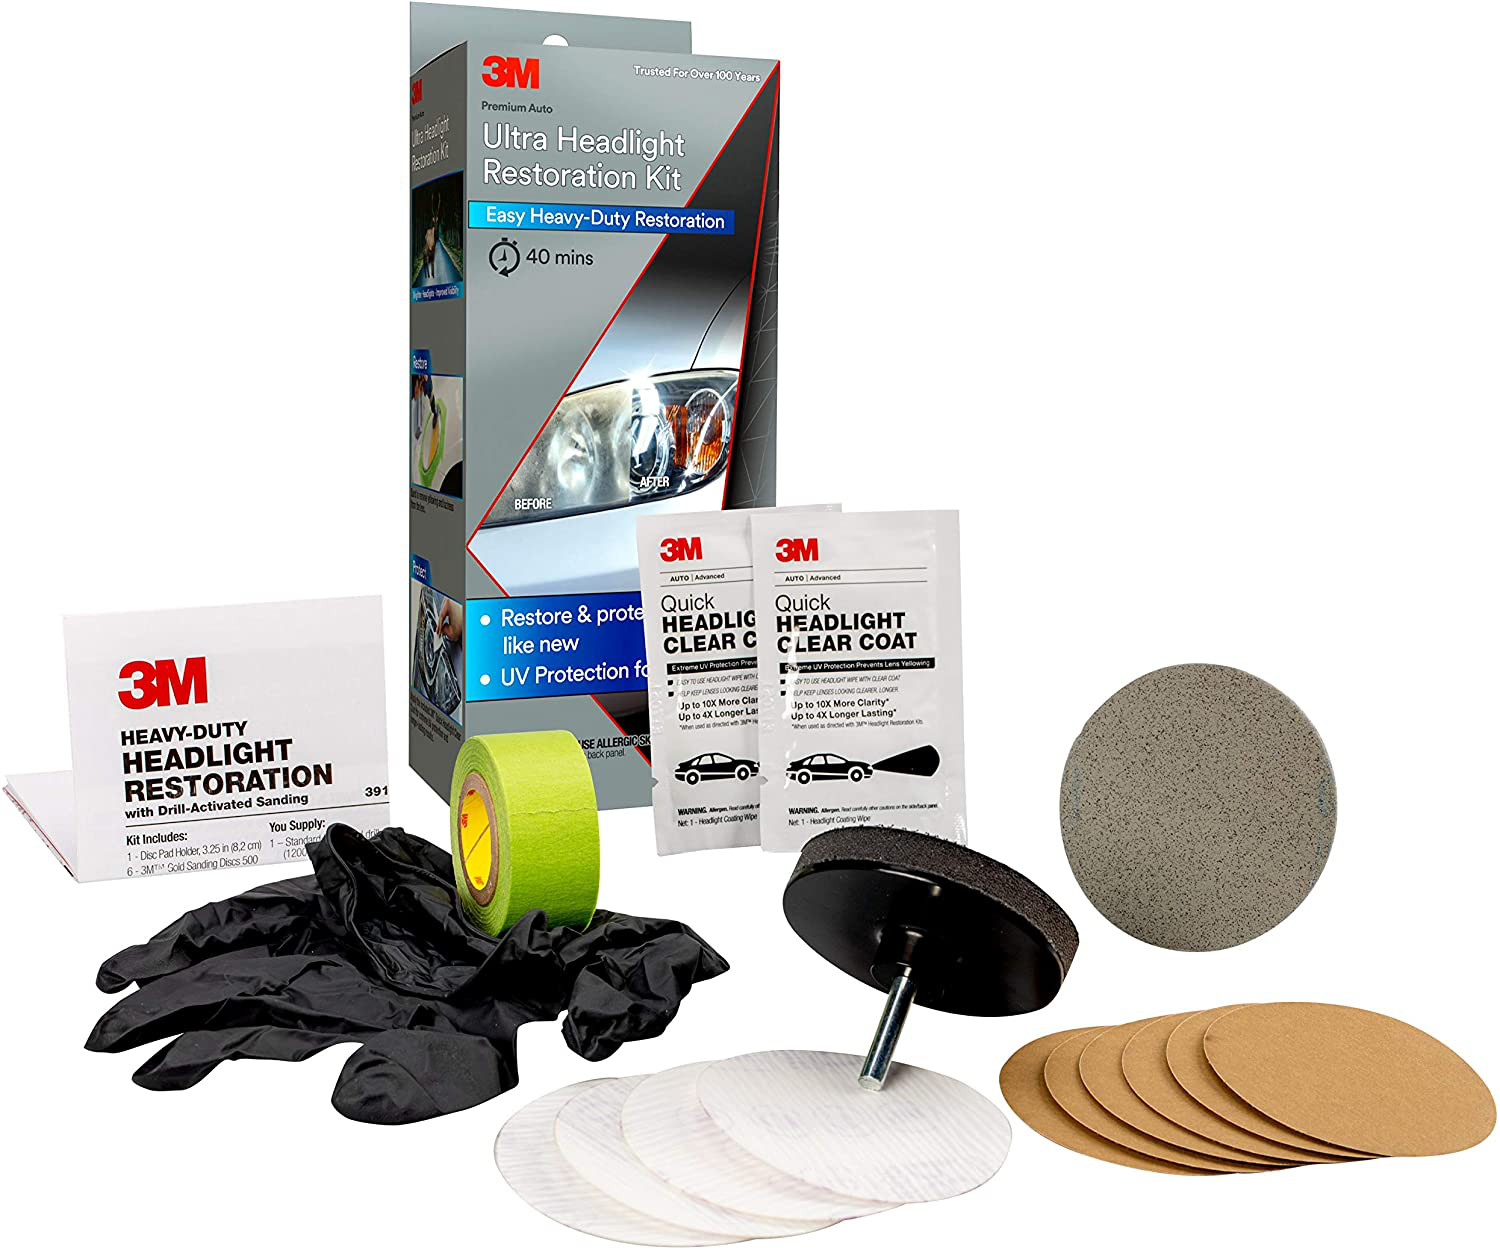 3M 39195 Ultra Headlight Restoration Kit, Easy Heavy-Duty Restoration